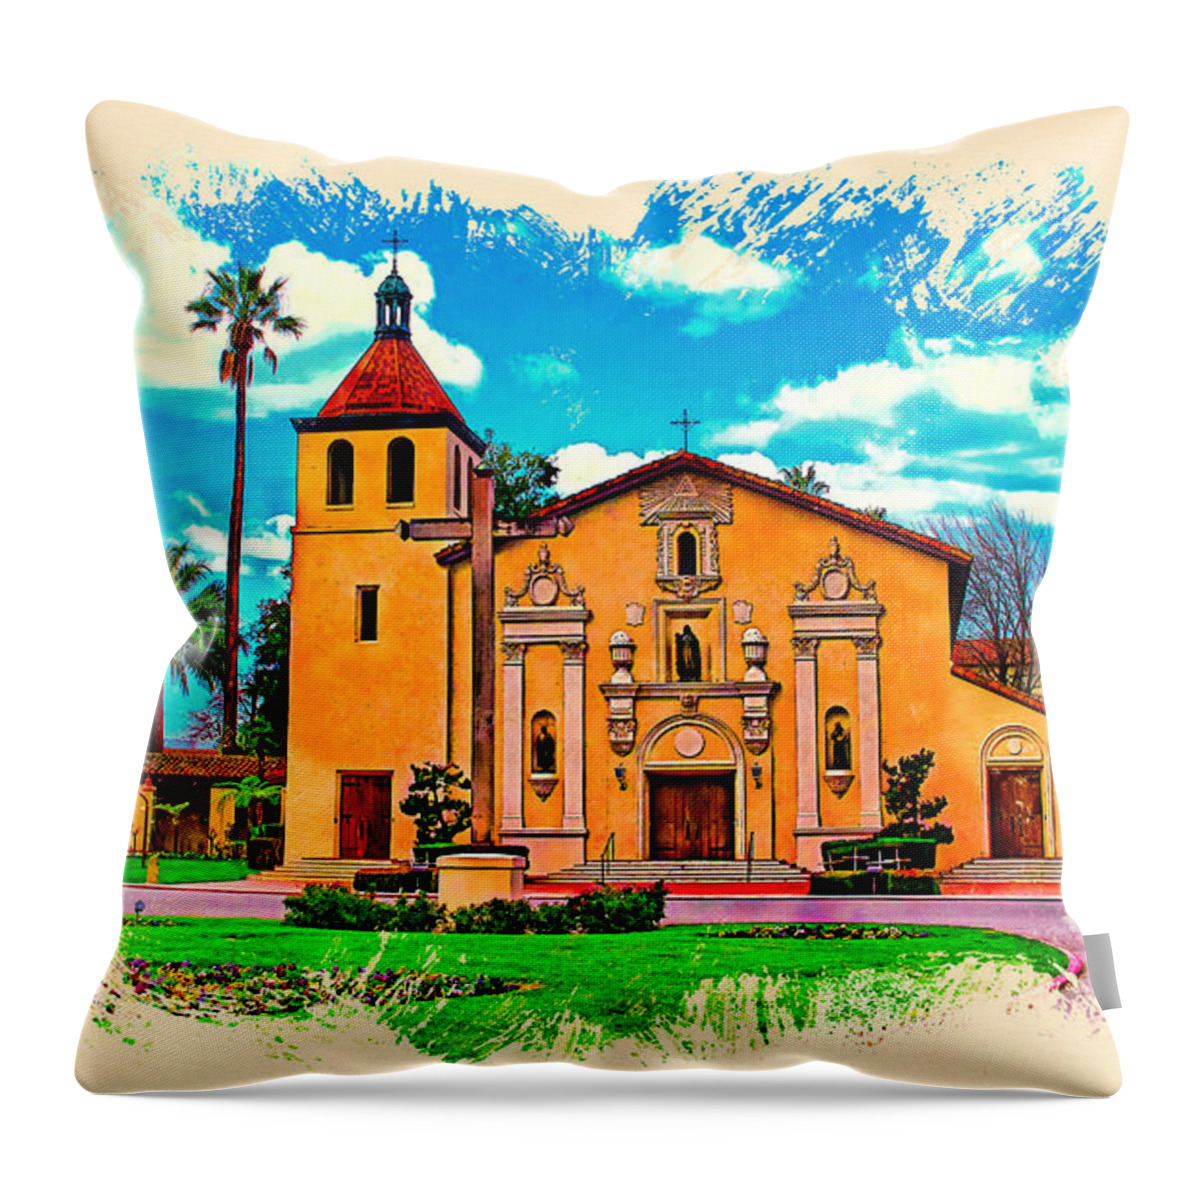 Mission Santa Clara Throw Pillow featuring the digital art Mission Santa Clara de Asis, watercolor painting by Nicko Prints